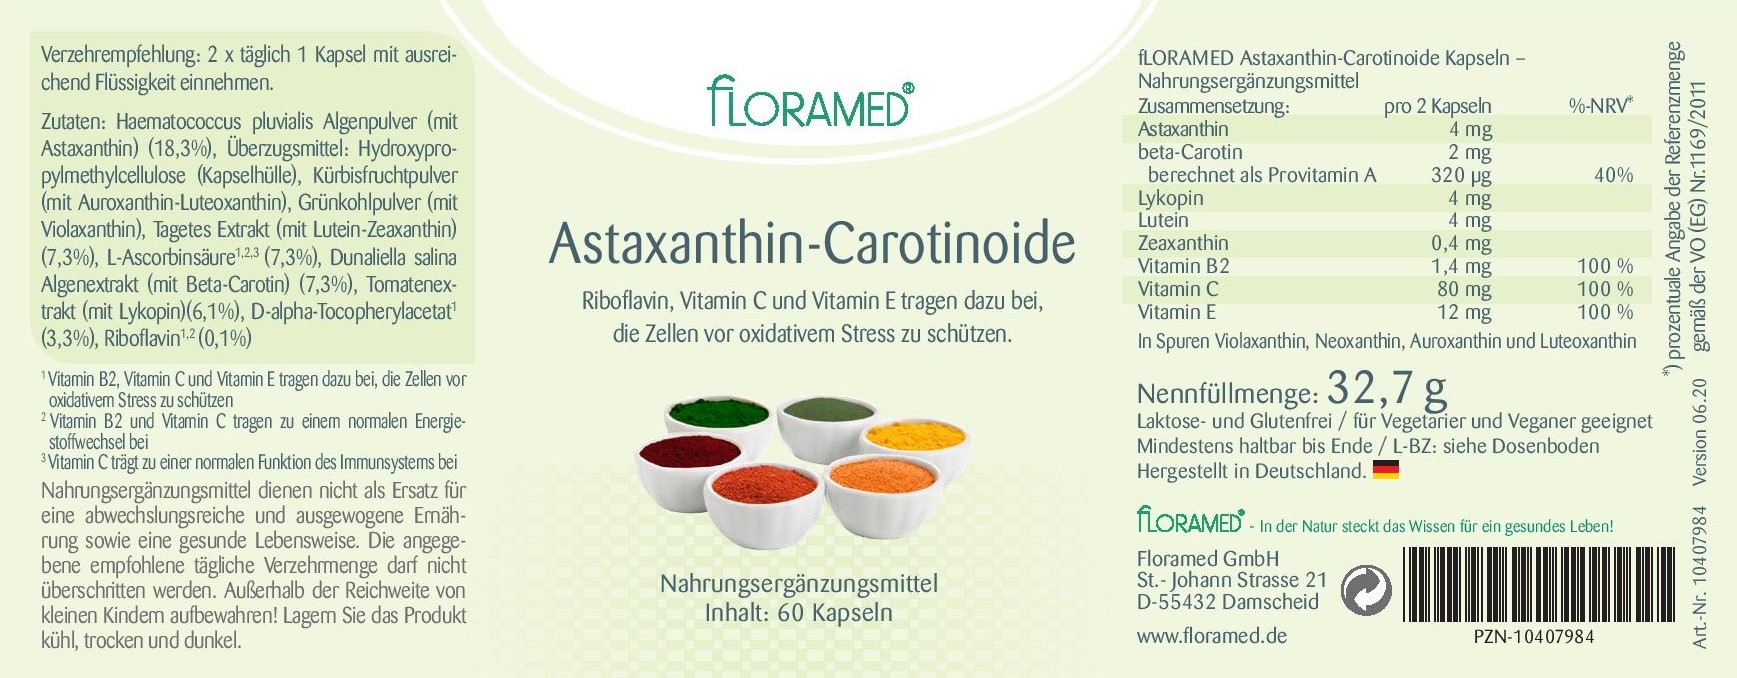 Floramed Astaxanthin-Carotinoide